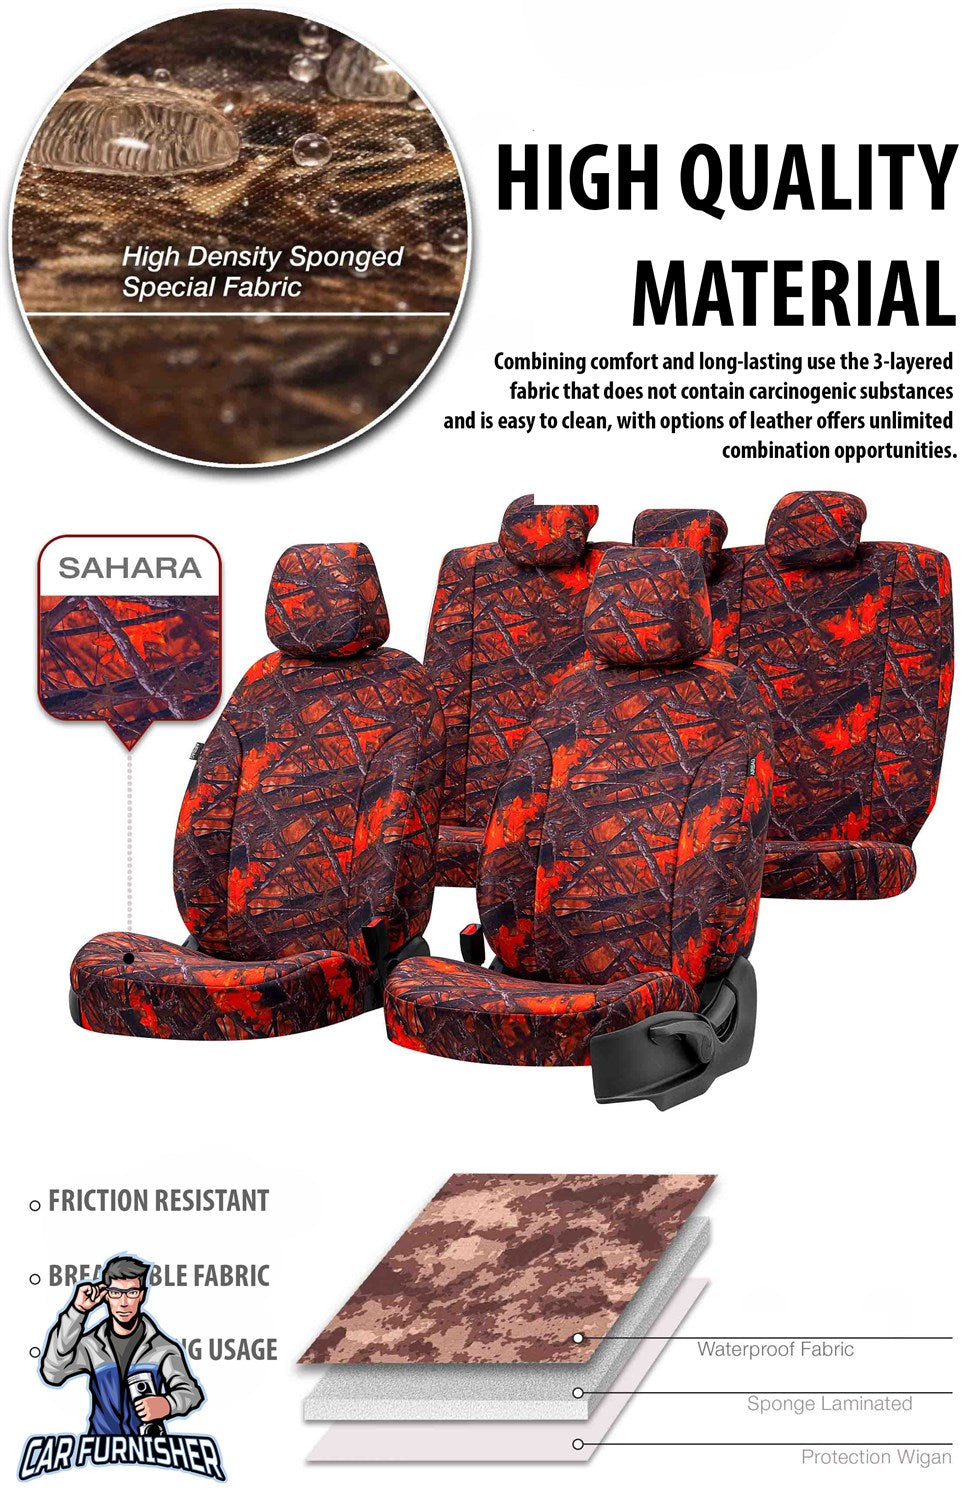 Bmw 1 Series Seat Cover Camouflage Waterproof Design Alps Camo Waterproof Fabric